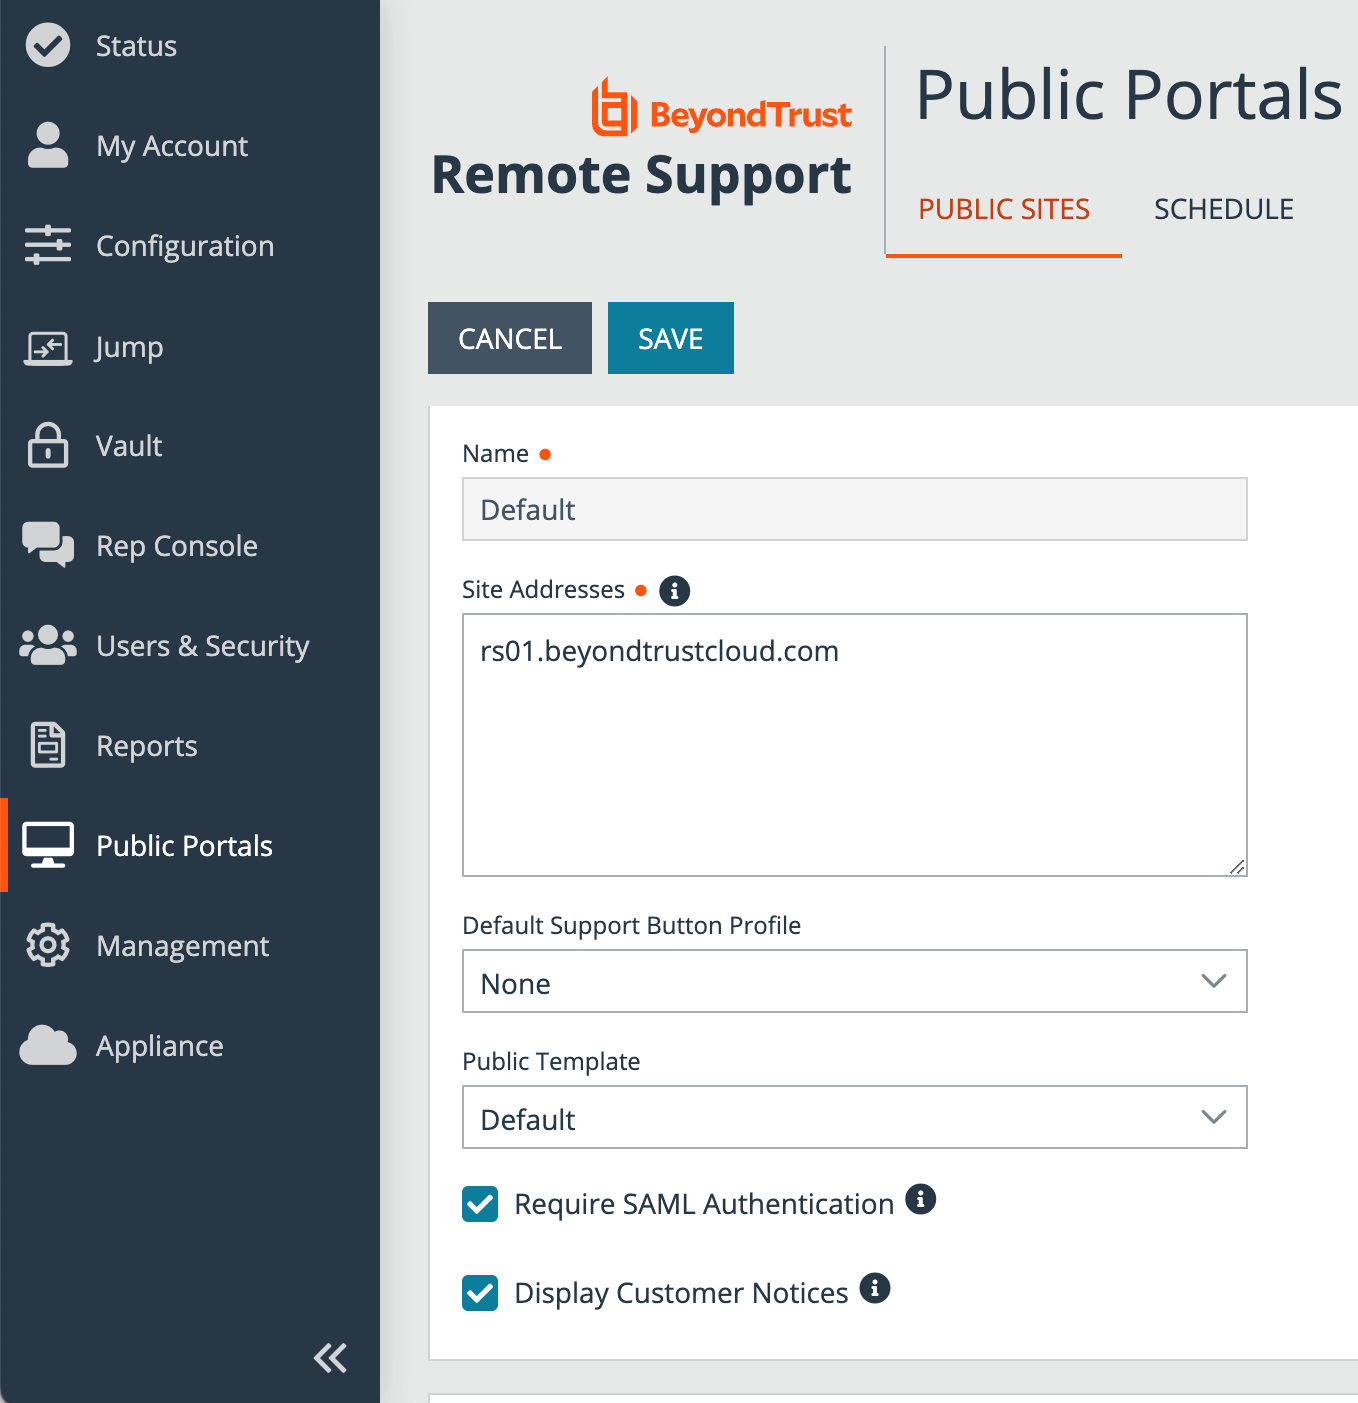 Enable using SAML in the public portal settings. 